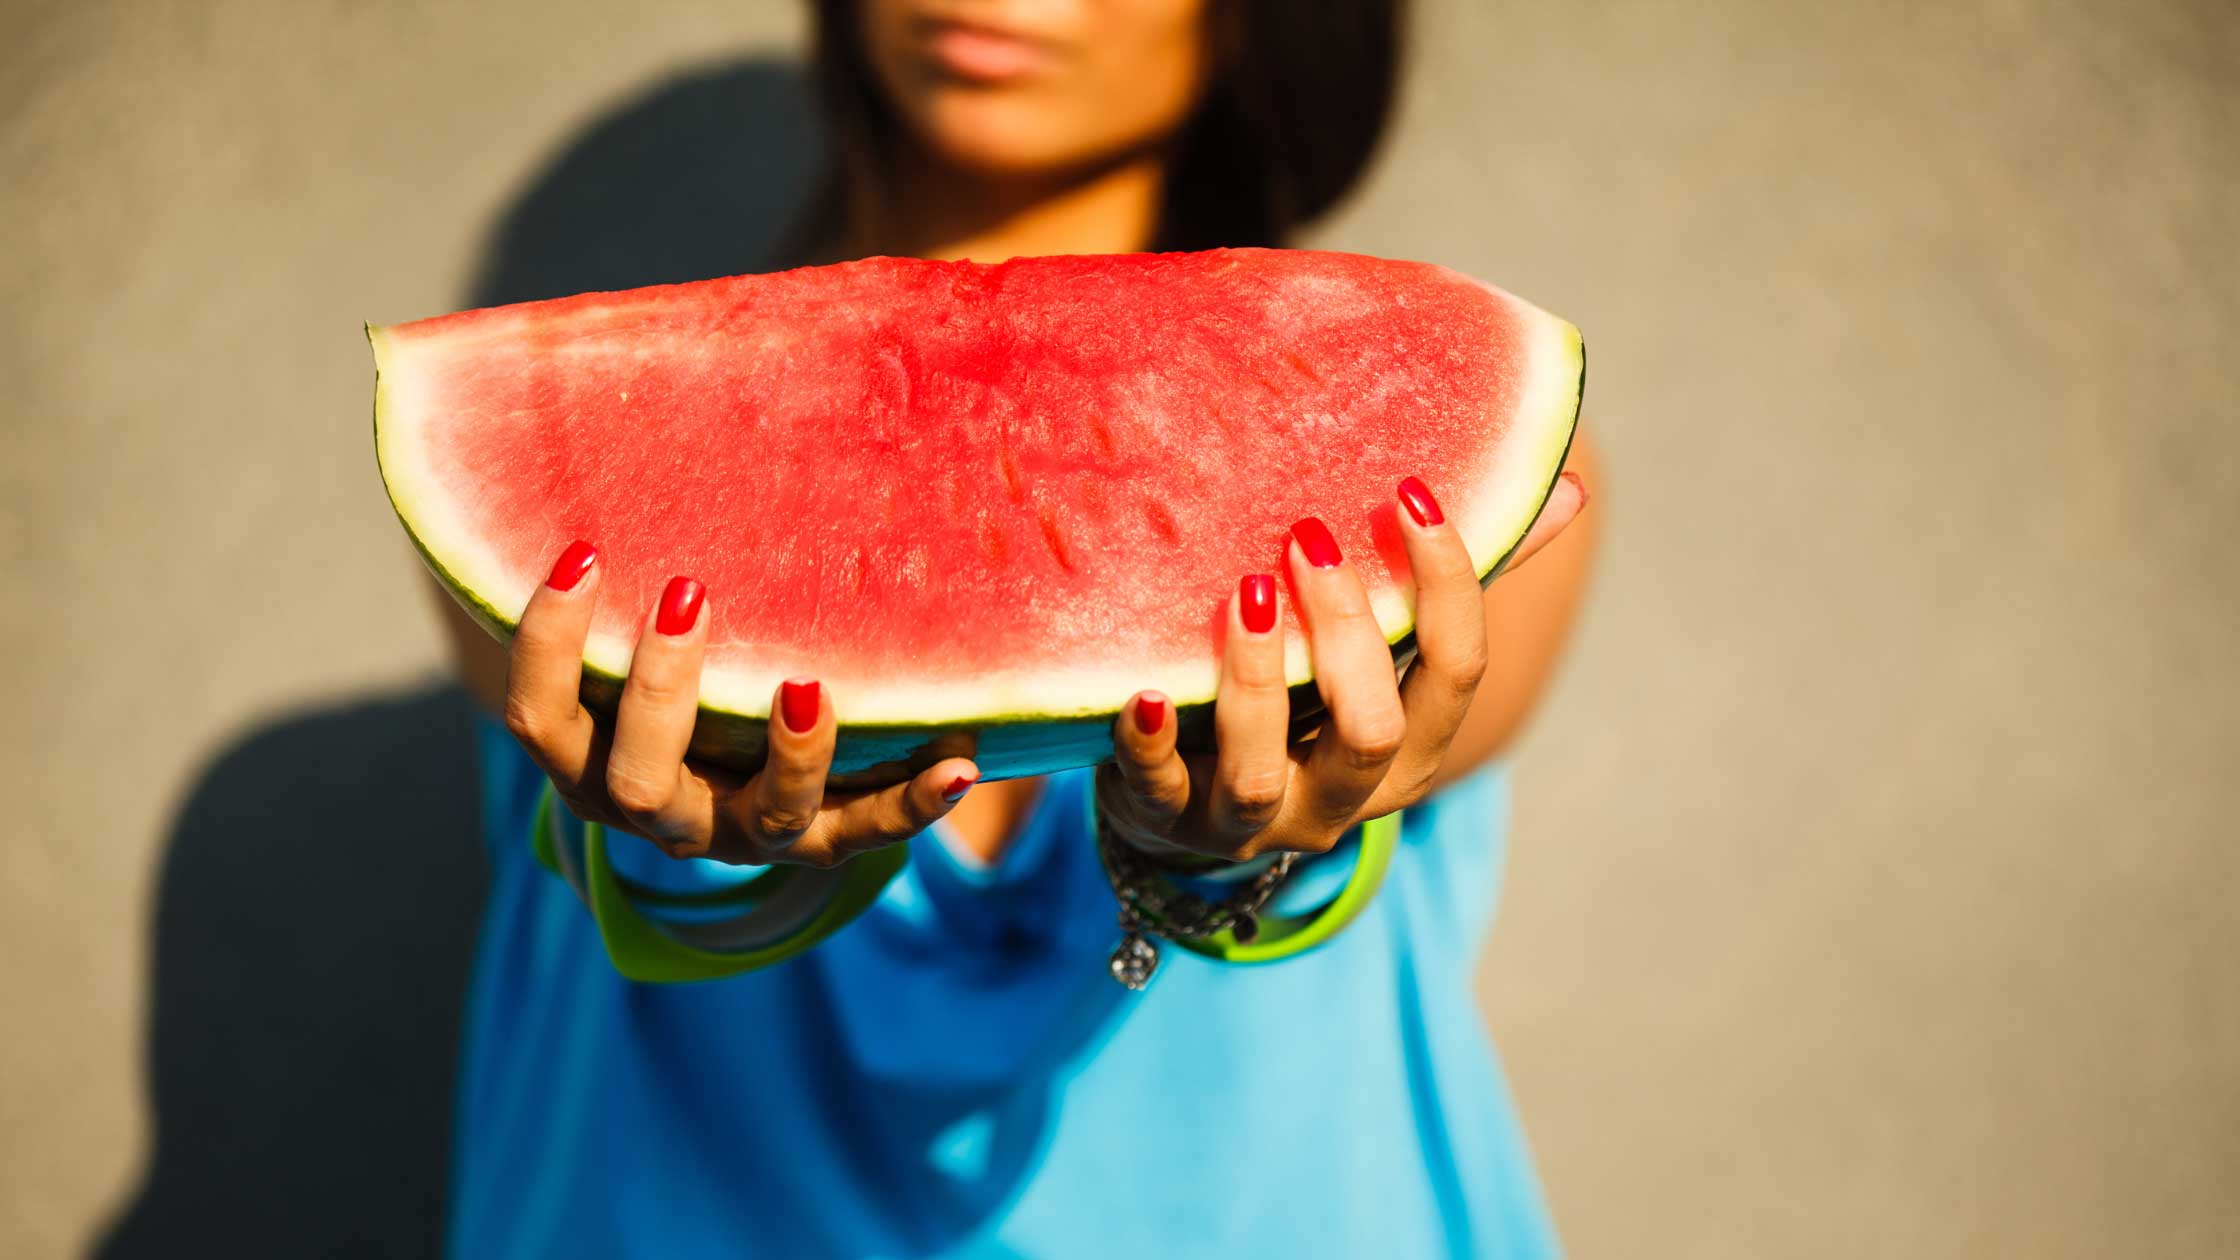 Woman holding a watermelon. Watermelon might improve sex drive.